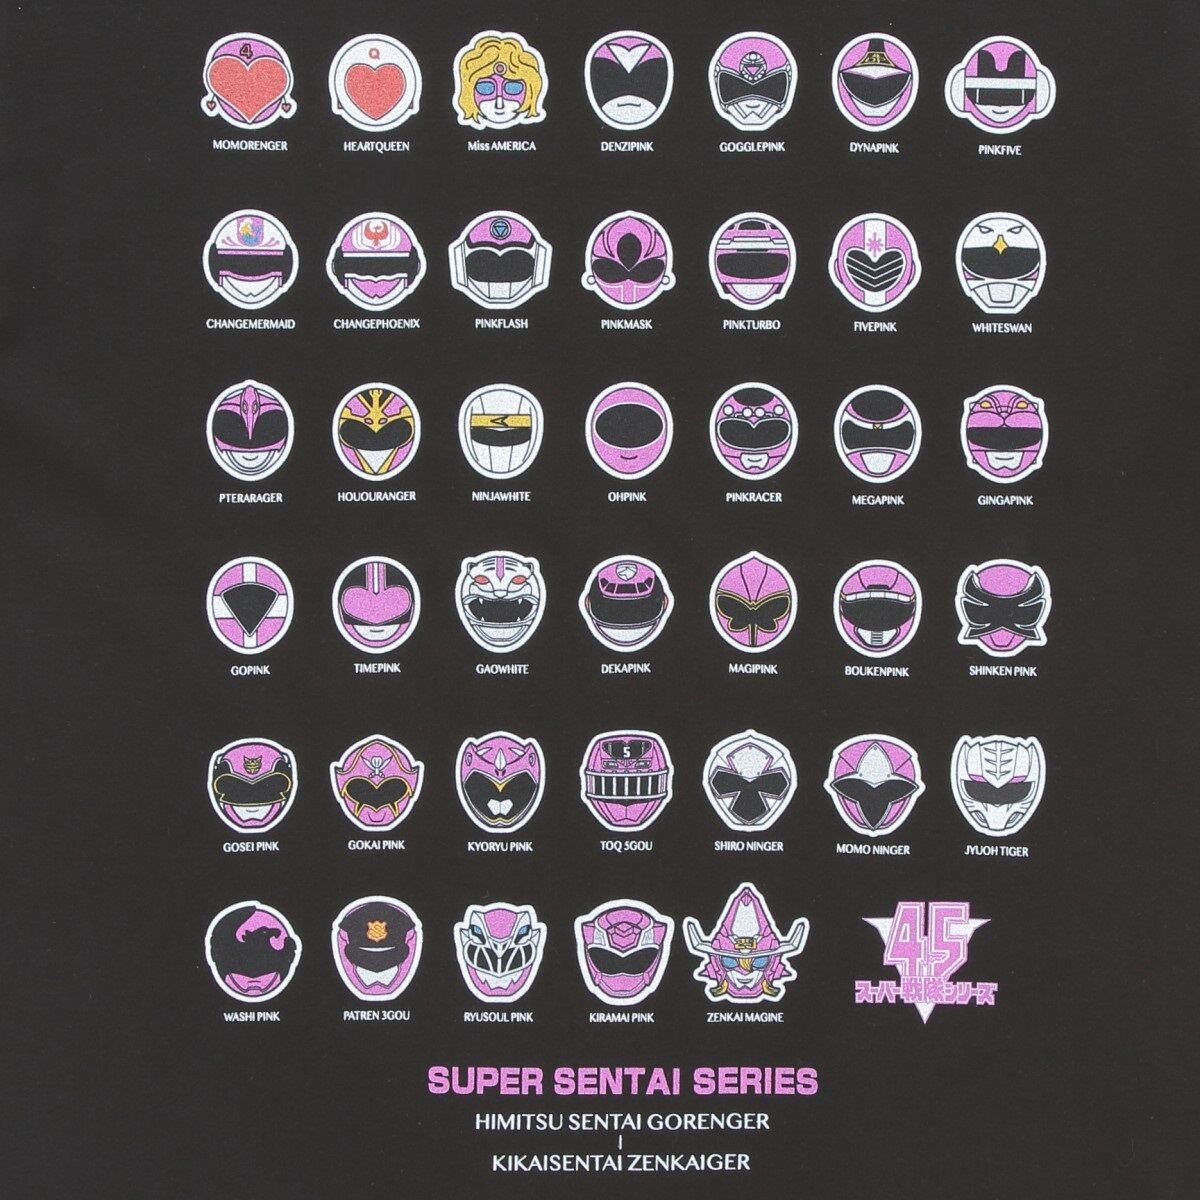 Super Sentai 45th Anniversary Pink Ranger T-Shirt